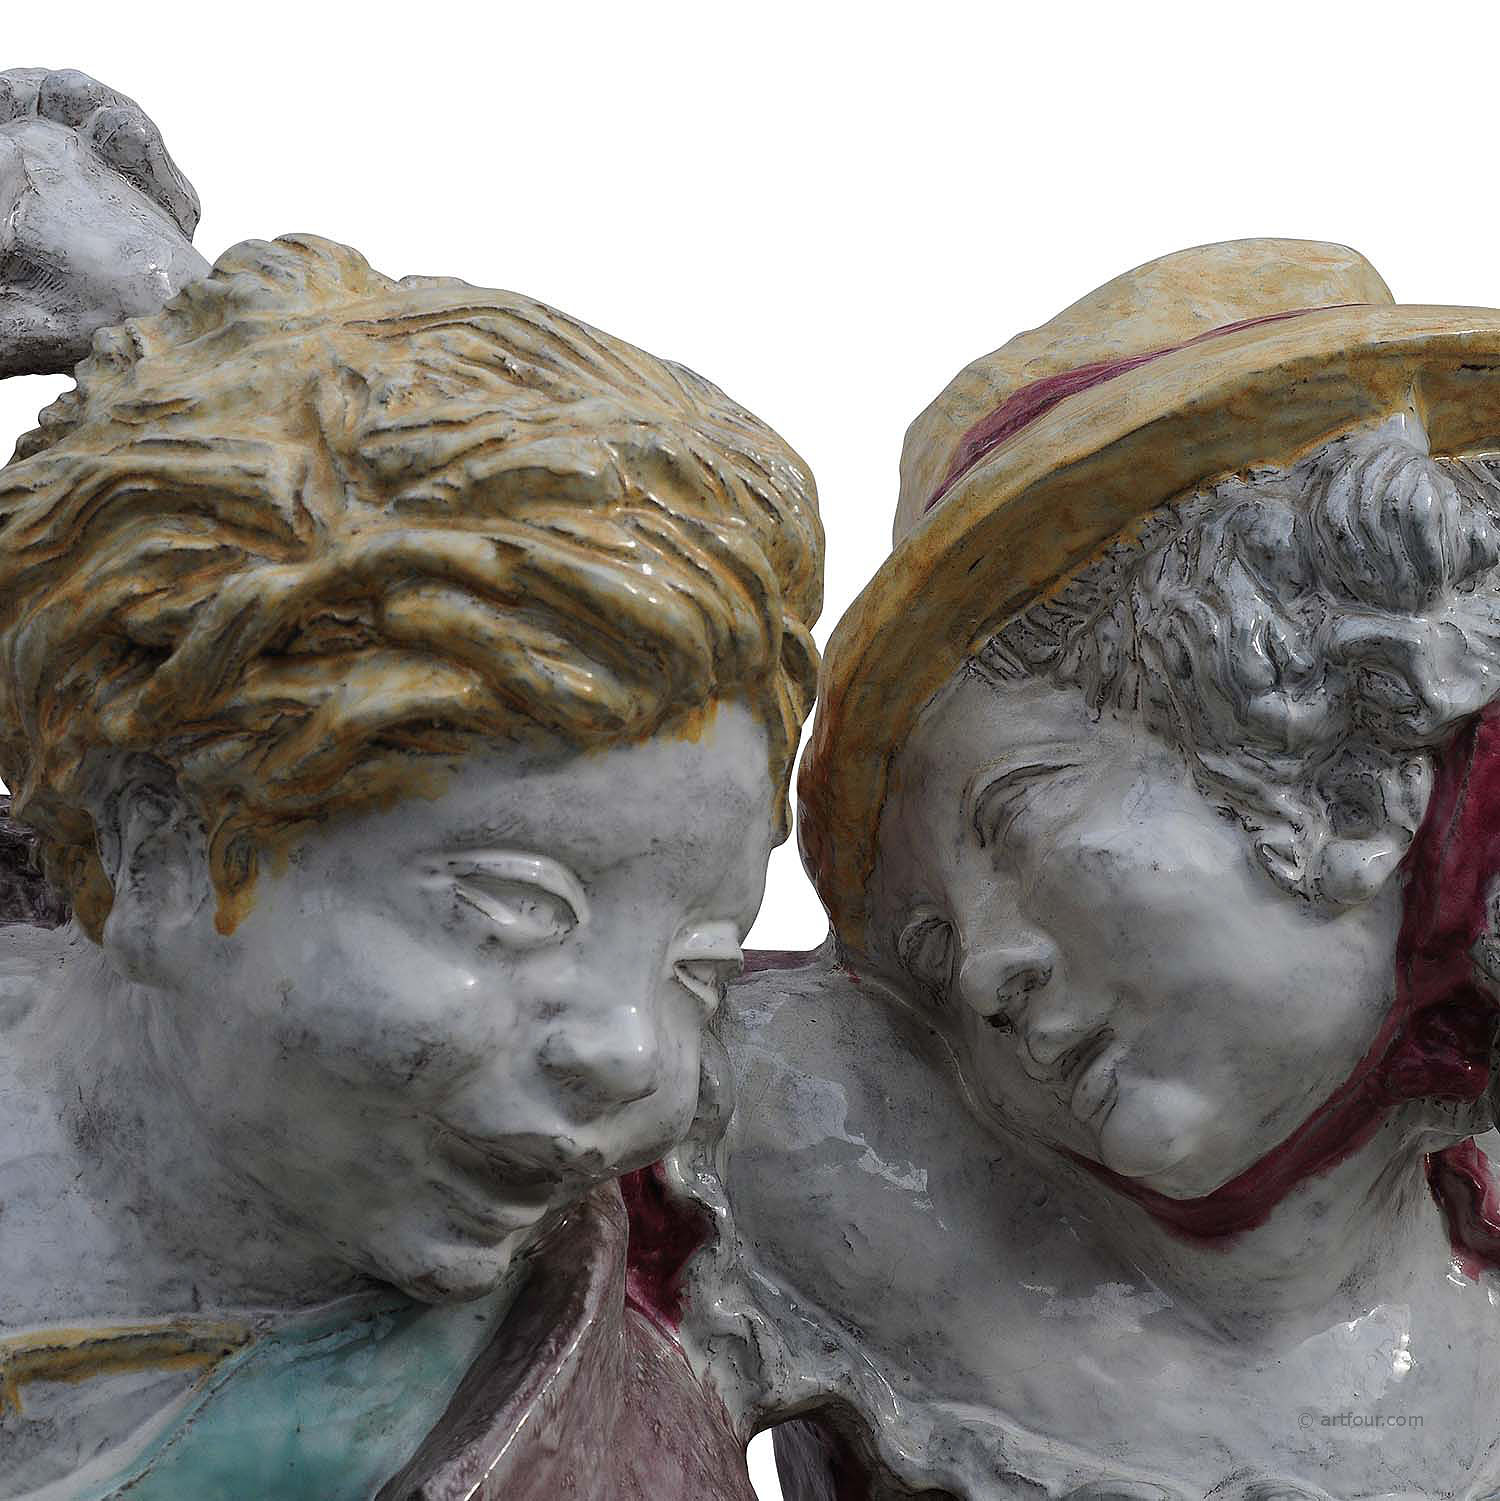 Nymphenburg Porcelain Sculpture Dancing Couple by Josef Wackerle